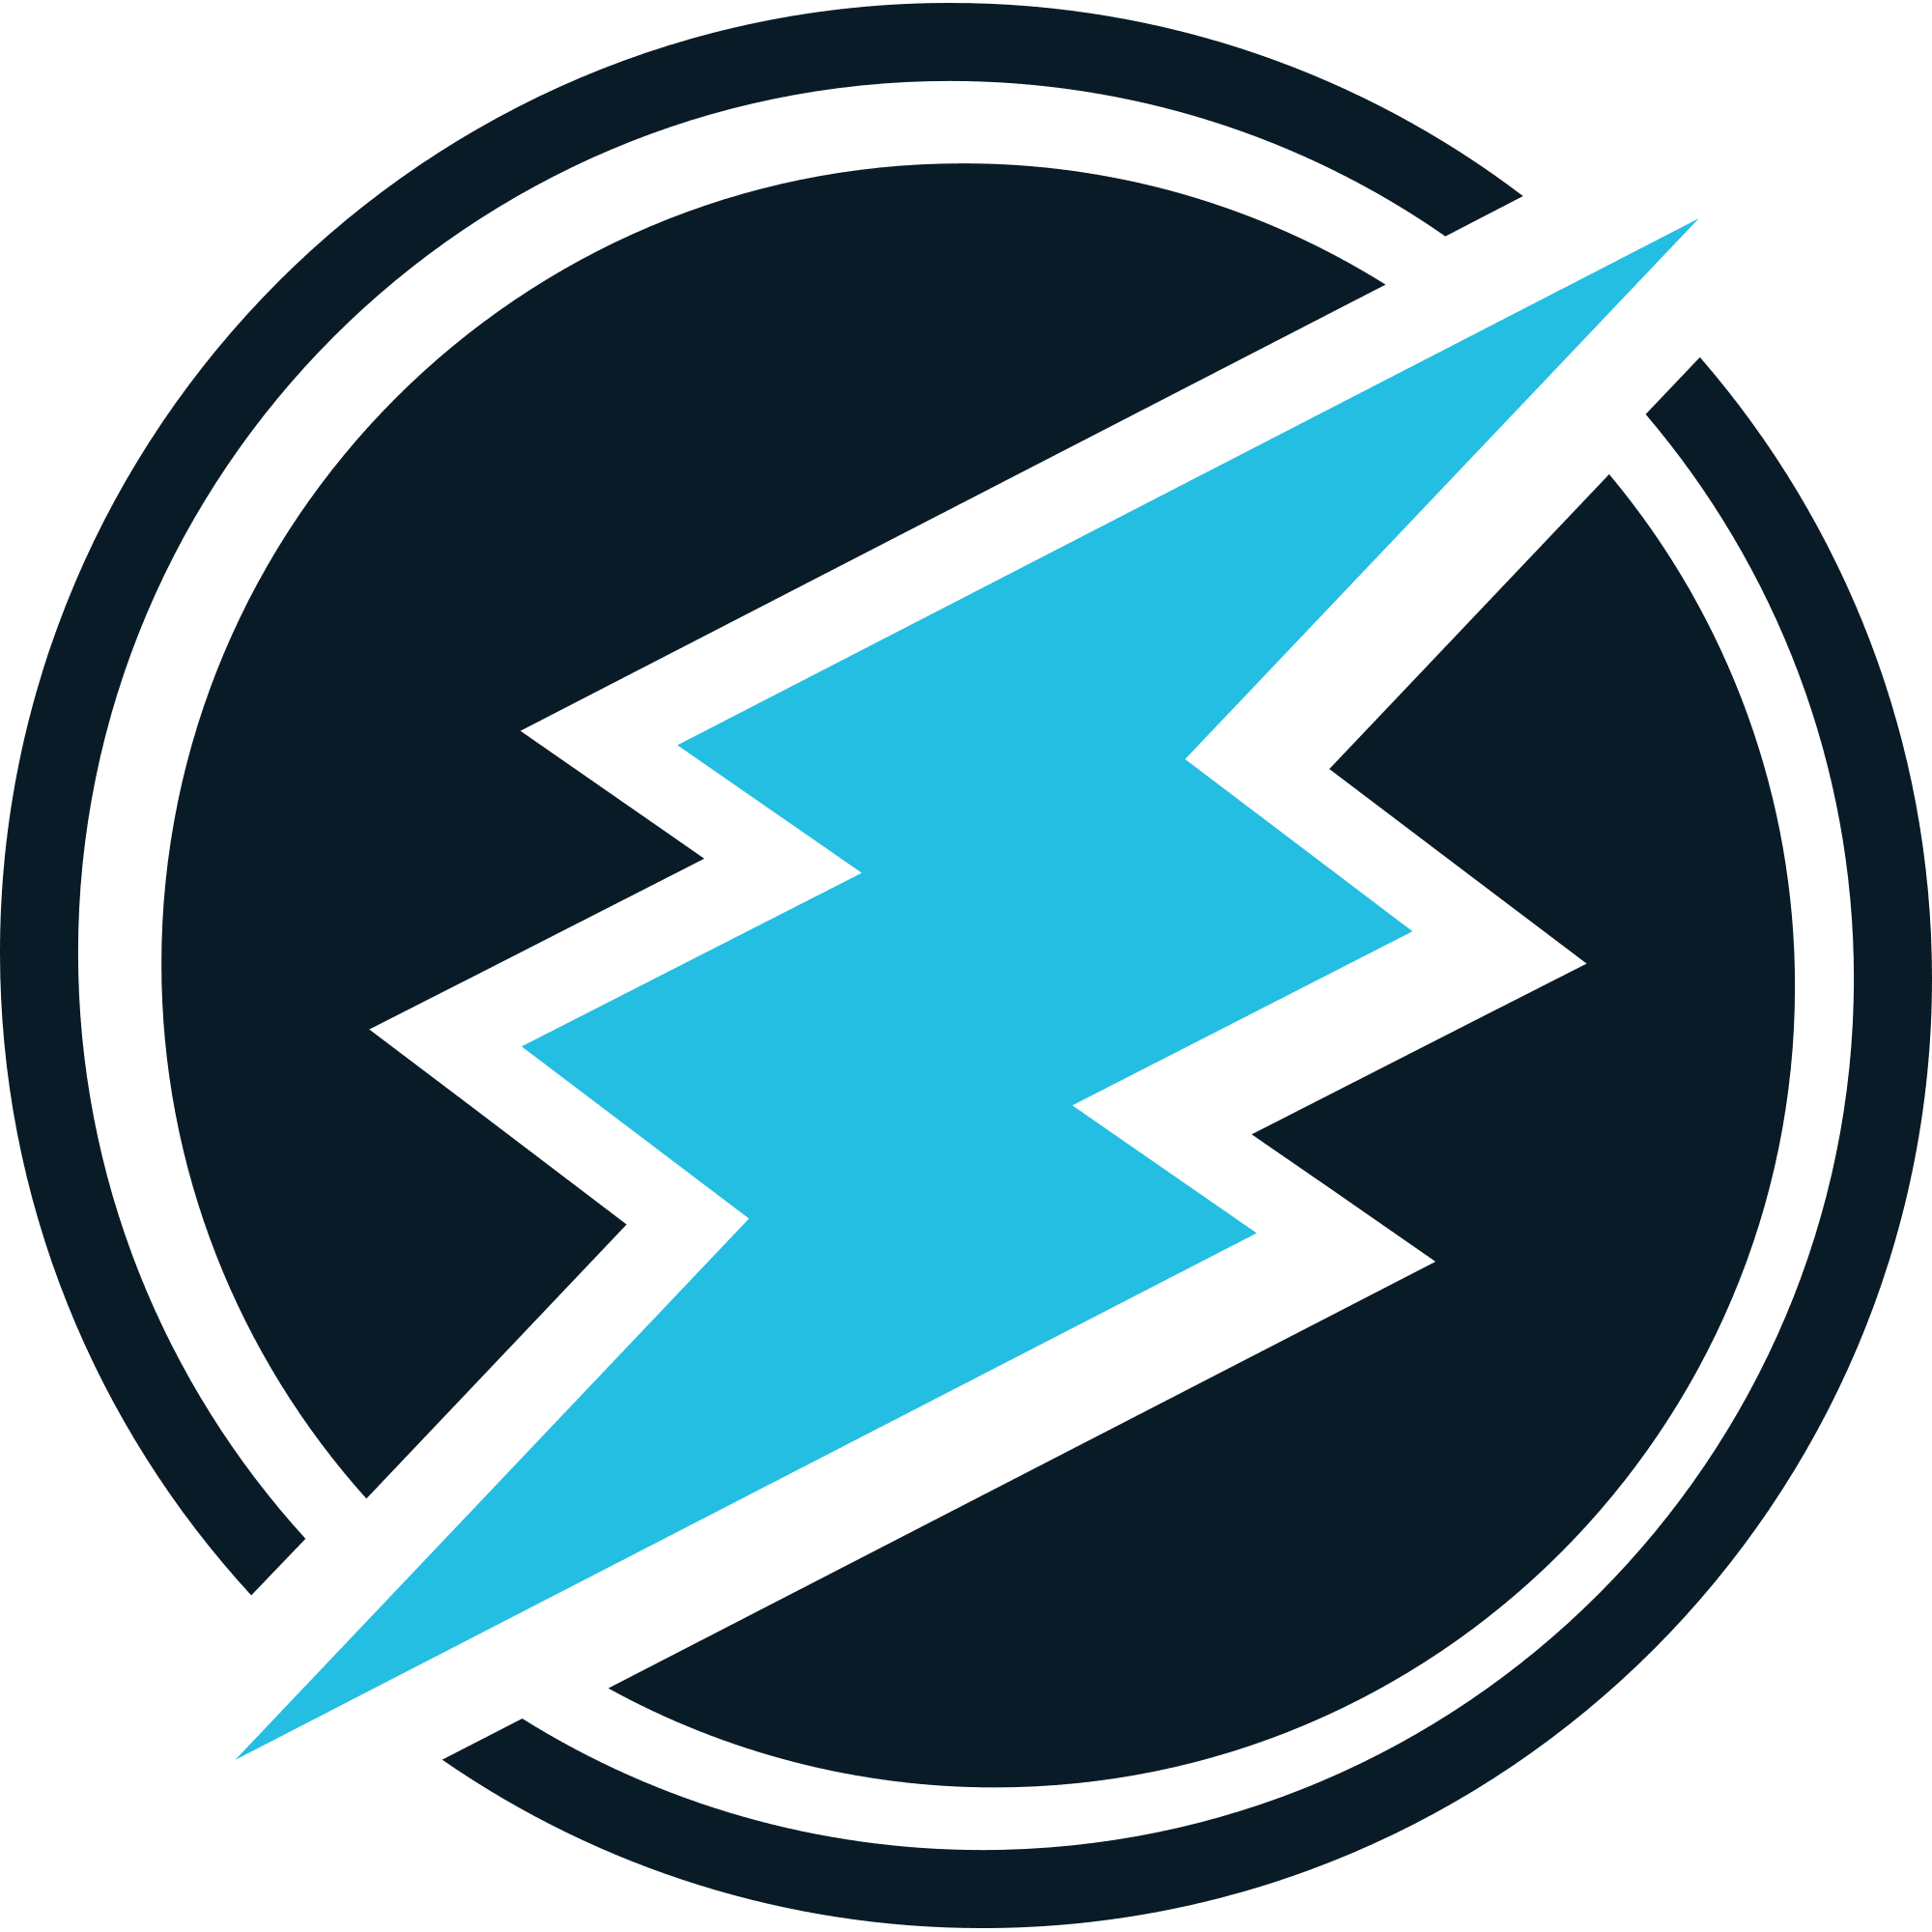 Electroneum logo in png format